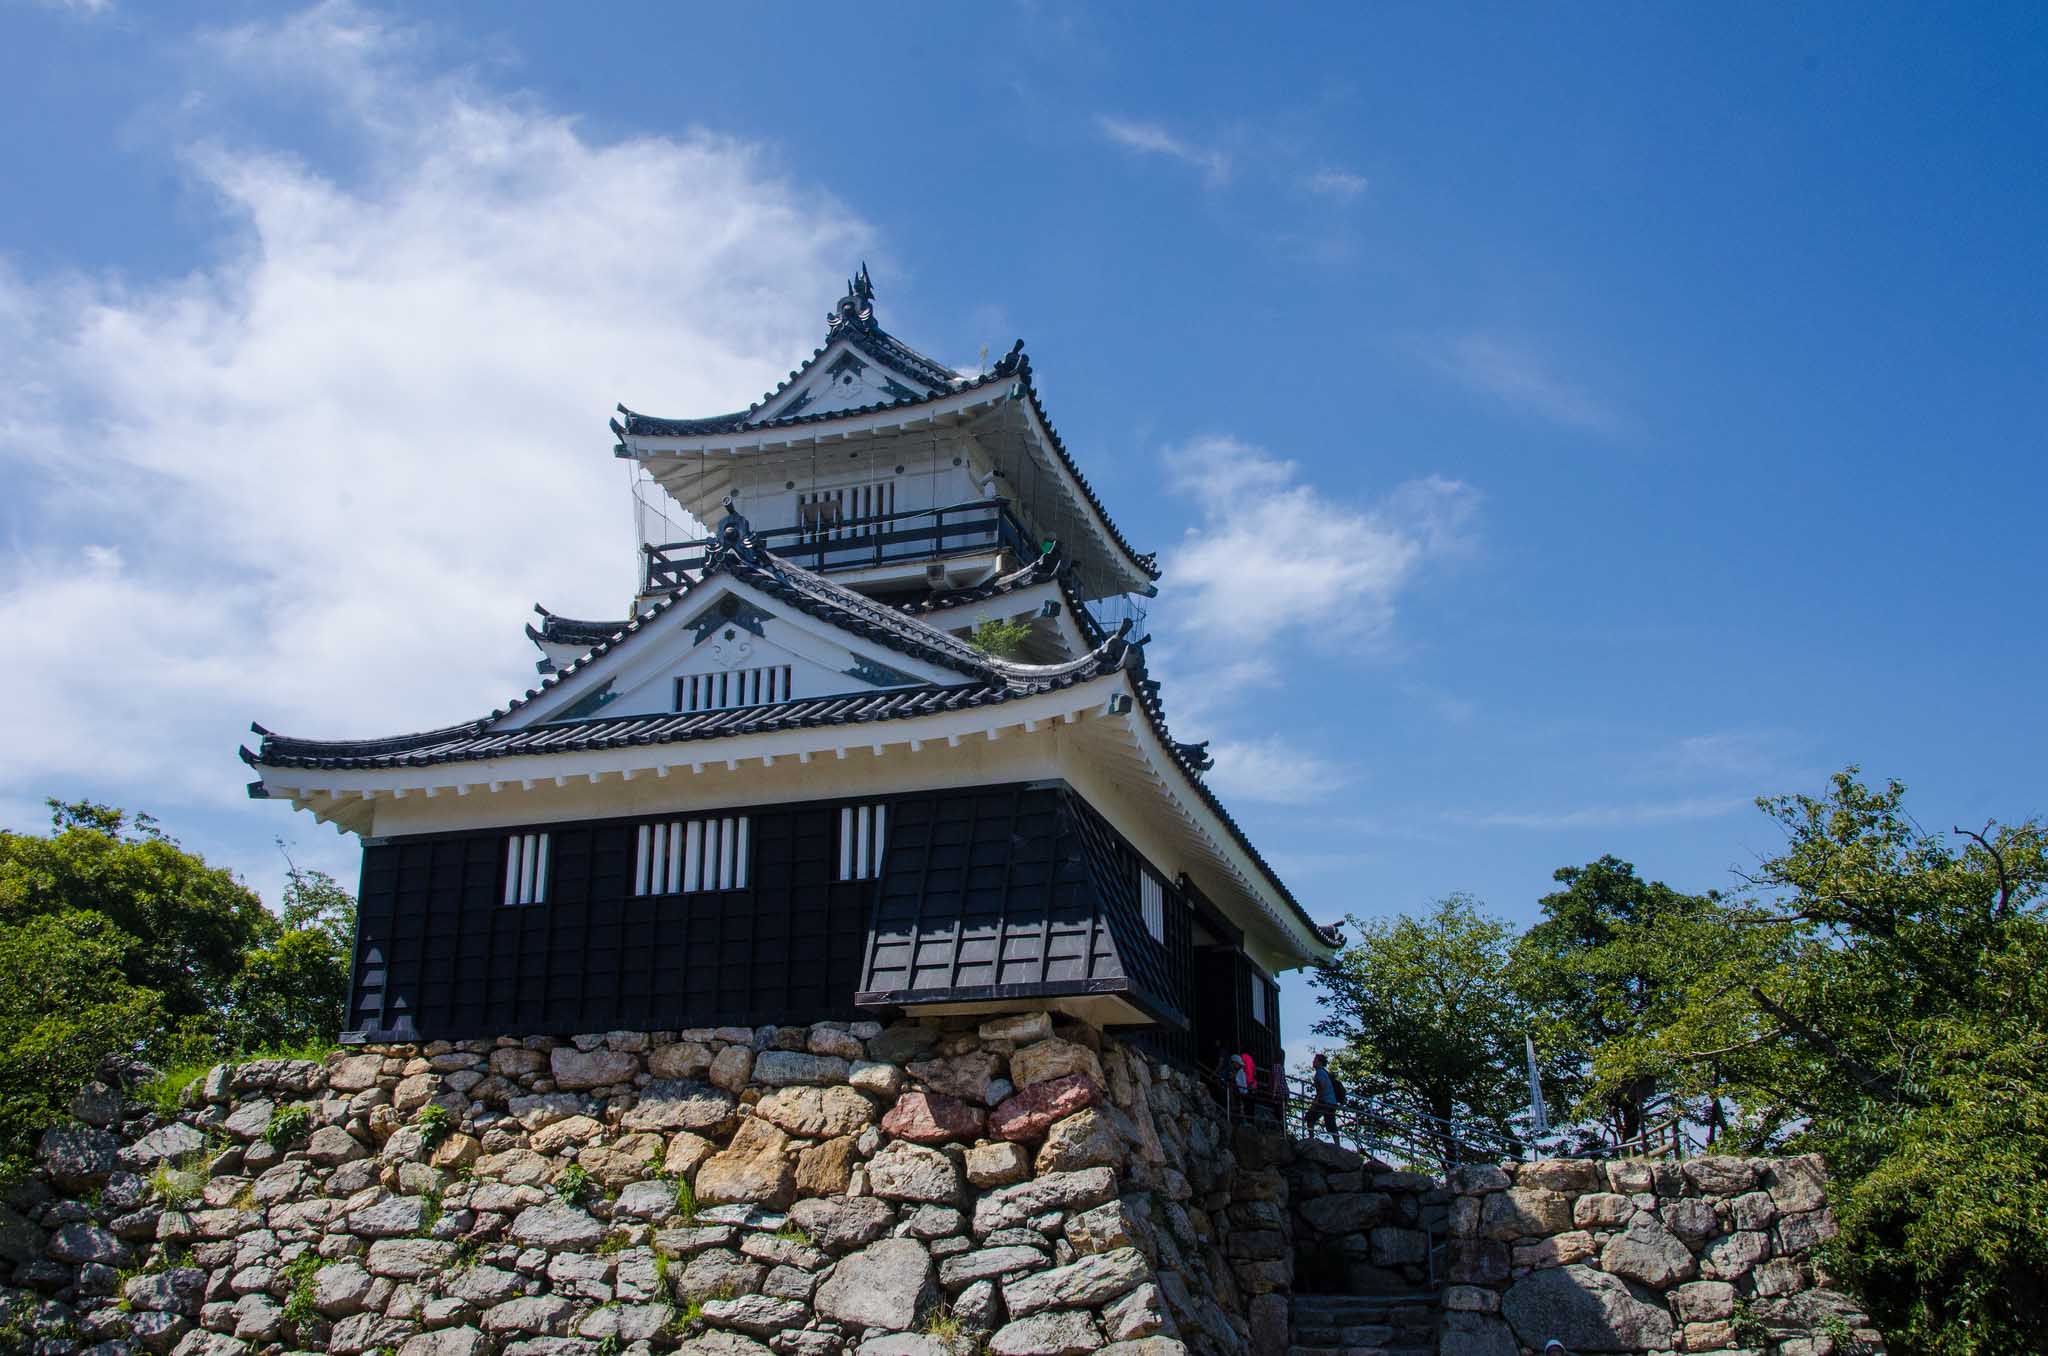 Hamamatsu Japan #1 - Hamamatsu Castle